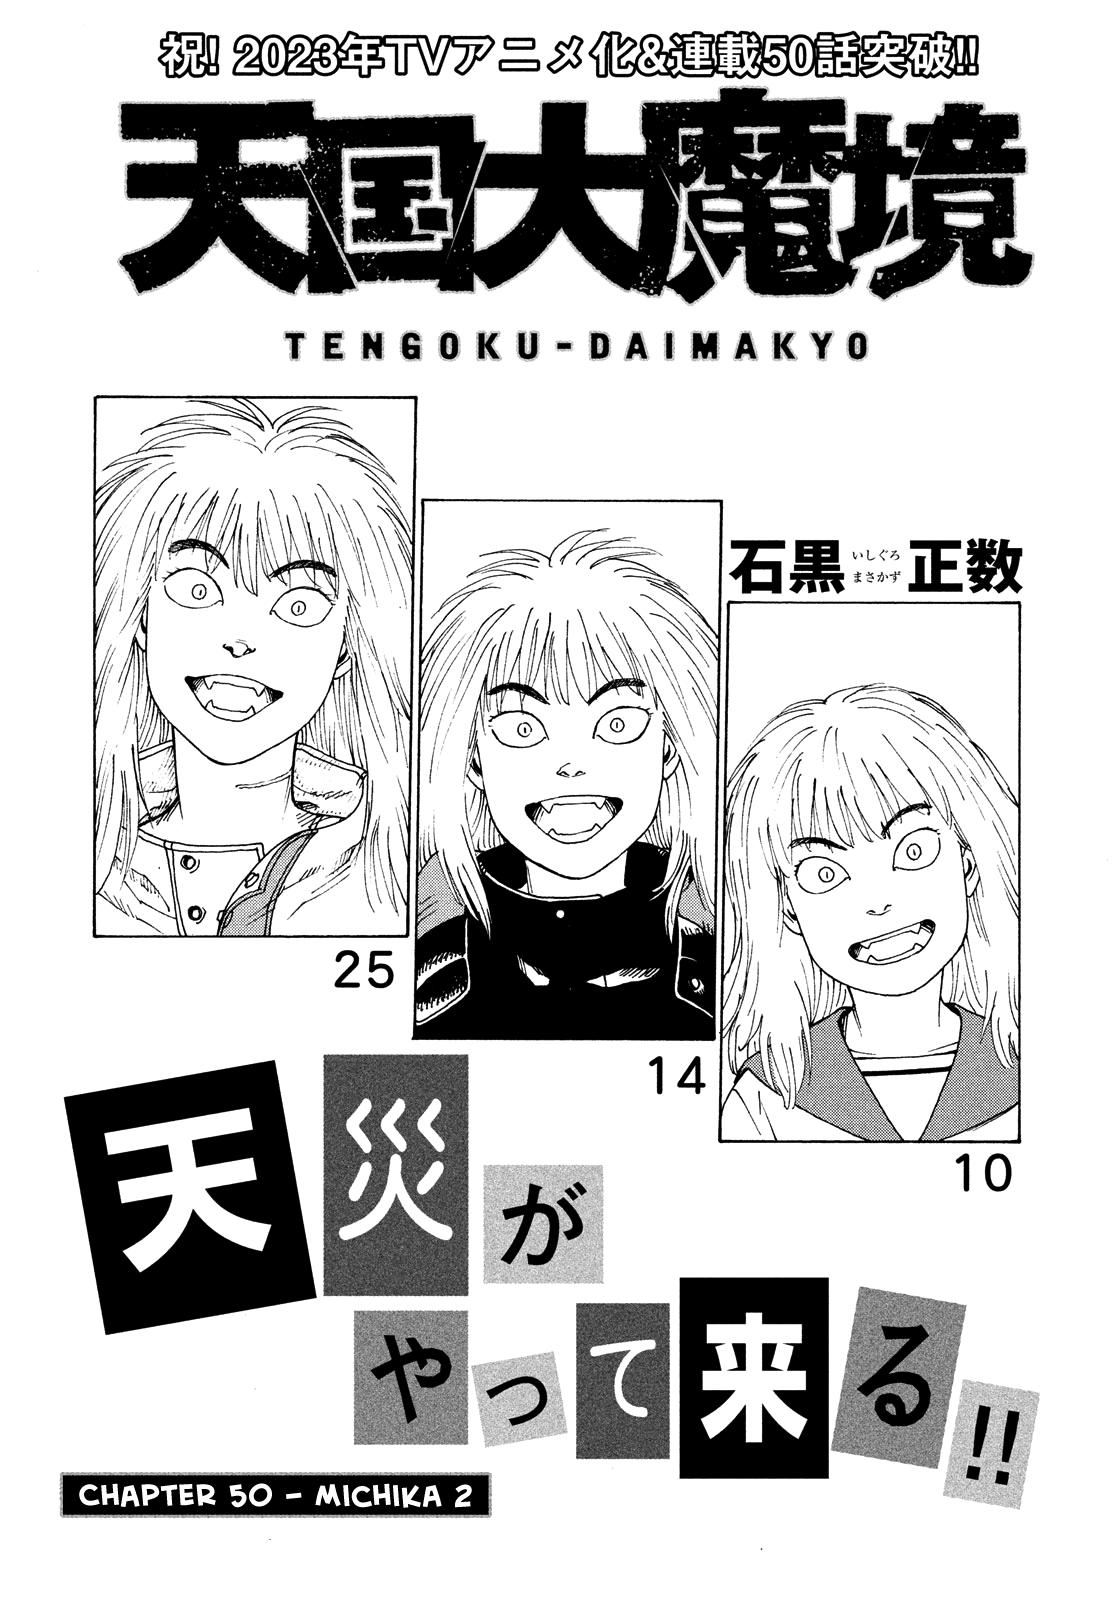 Read Tengoku Daimakyou Vol.8 Chapter 46: Sawatari Teruhiko - Manganelo